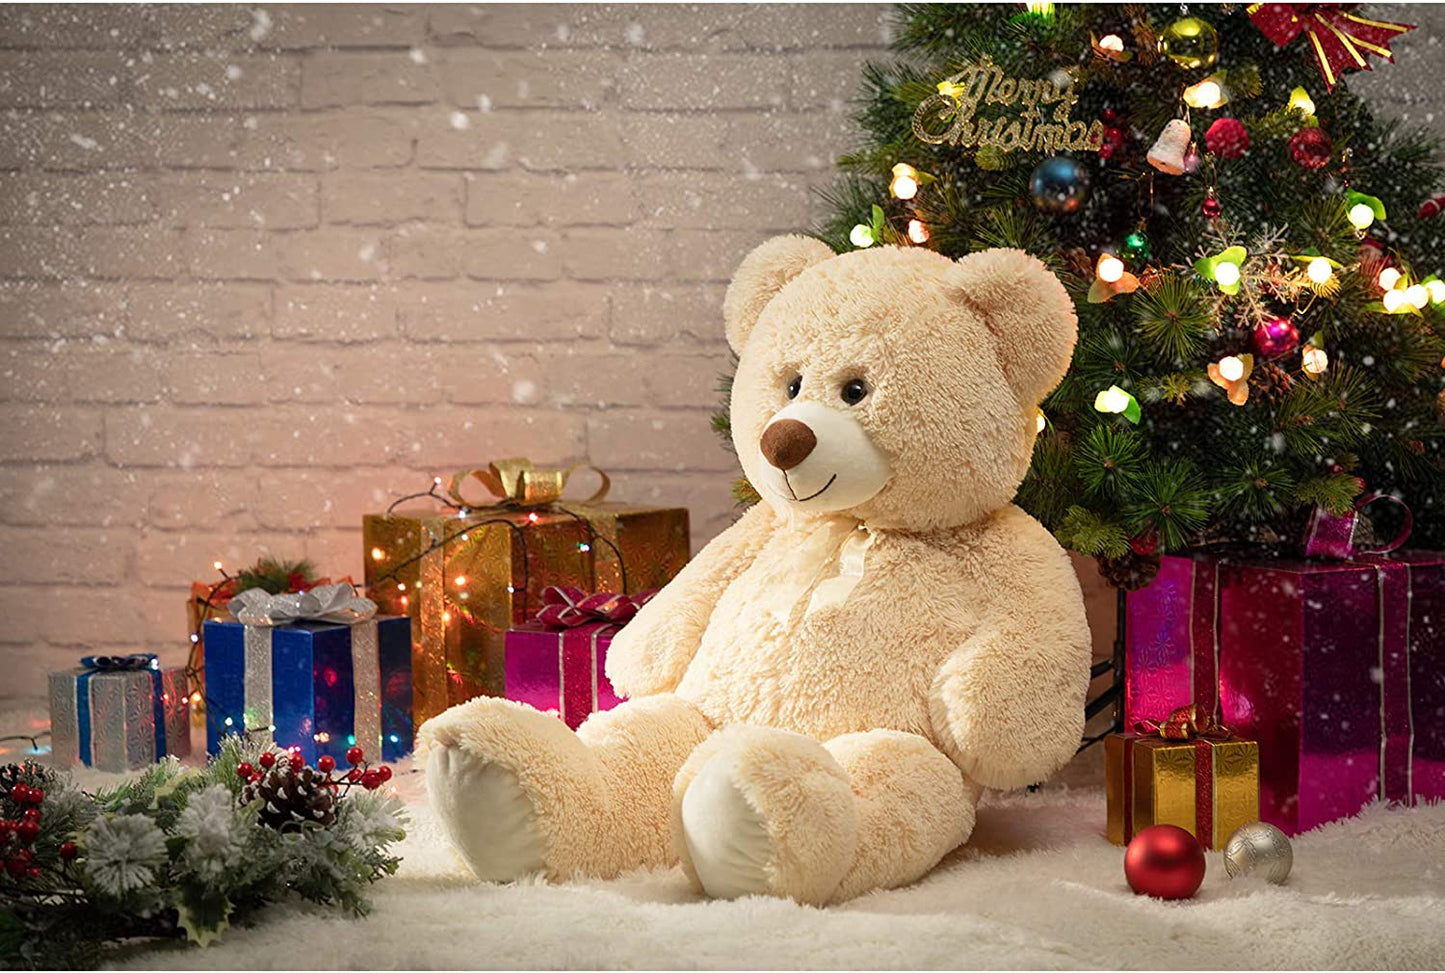 Teddy Bear Plush Giant Teddy Bears Stuffed Animals Teddy Bear Love 36 Inch Begie